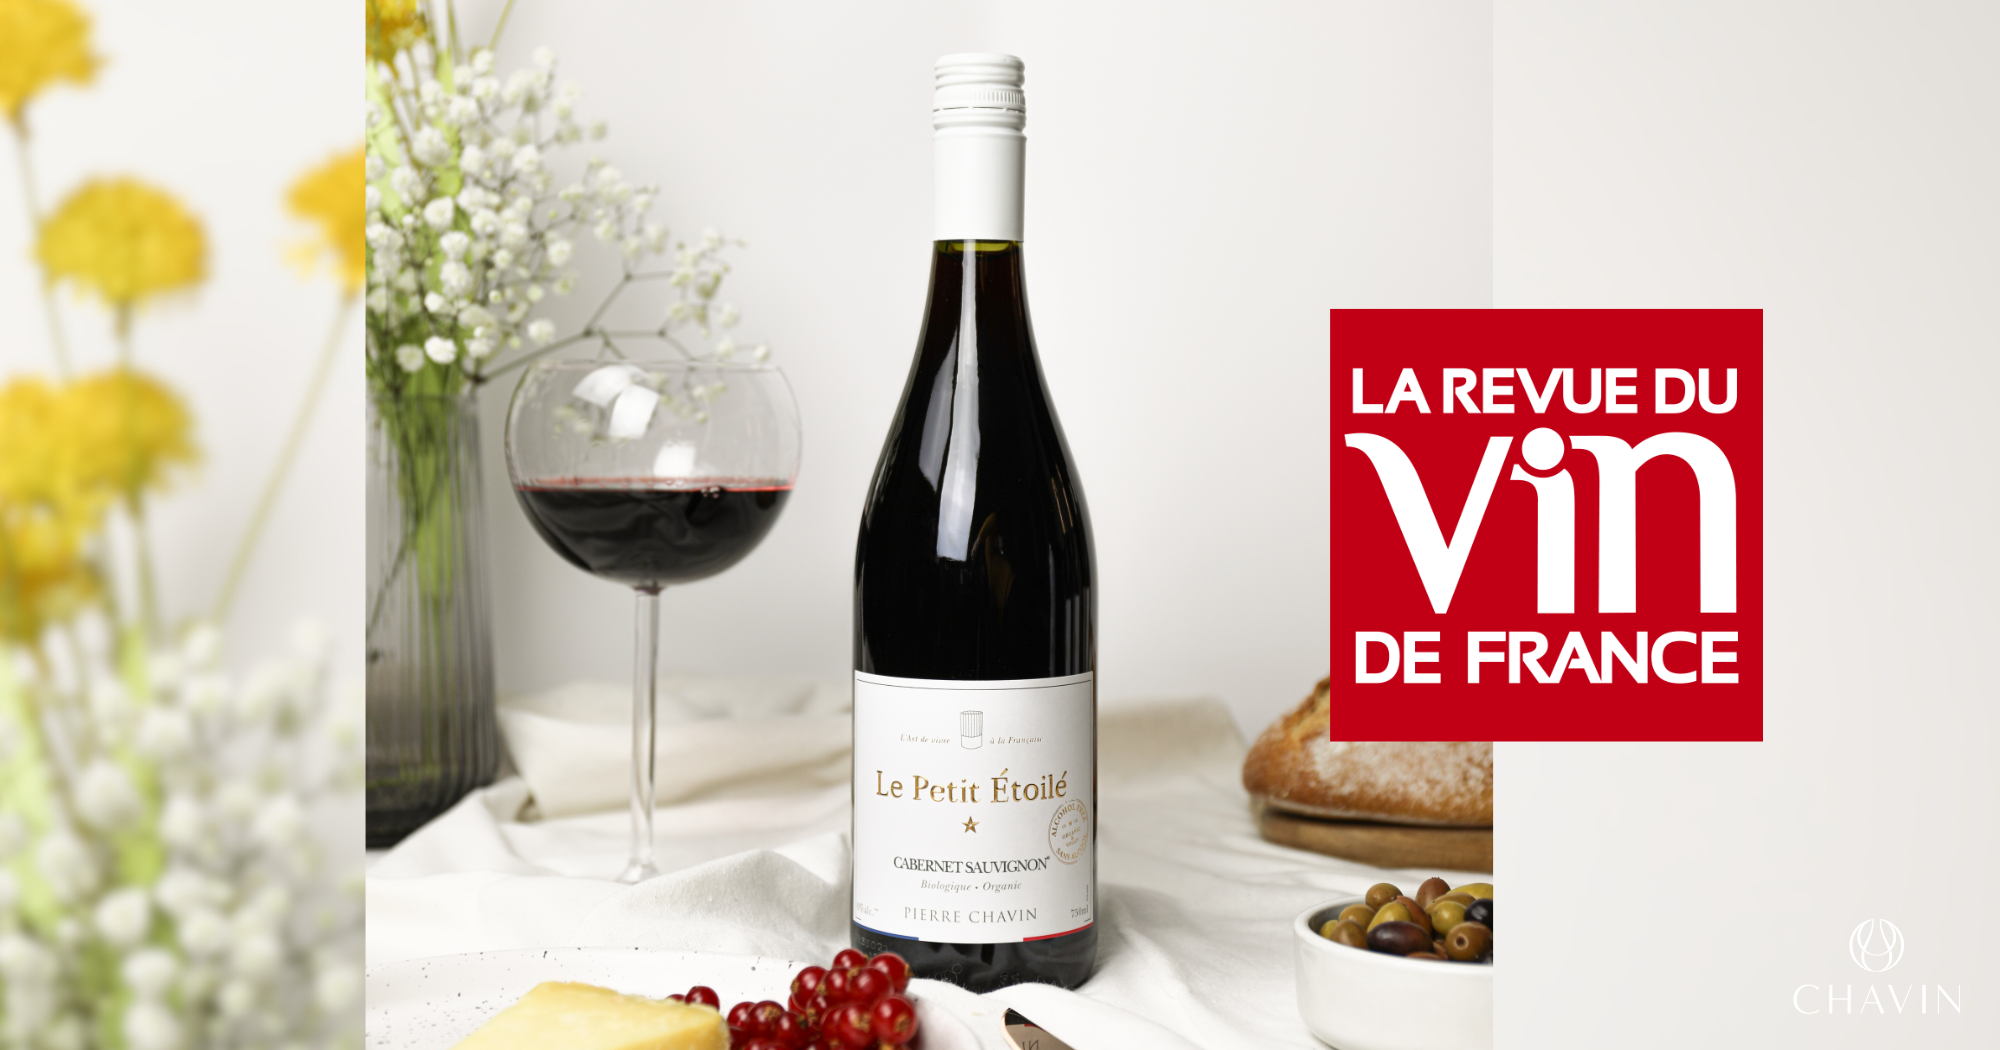 Chavin - Chavin brilliantly featured in La Revue des Vins de France for its non-alcoholic commitment